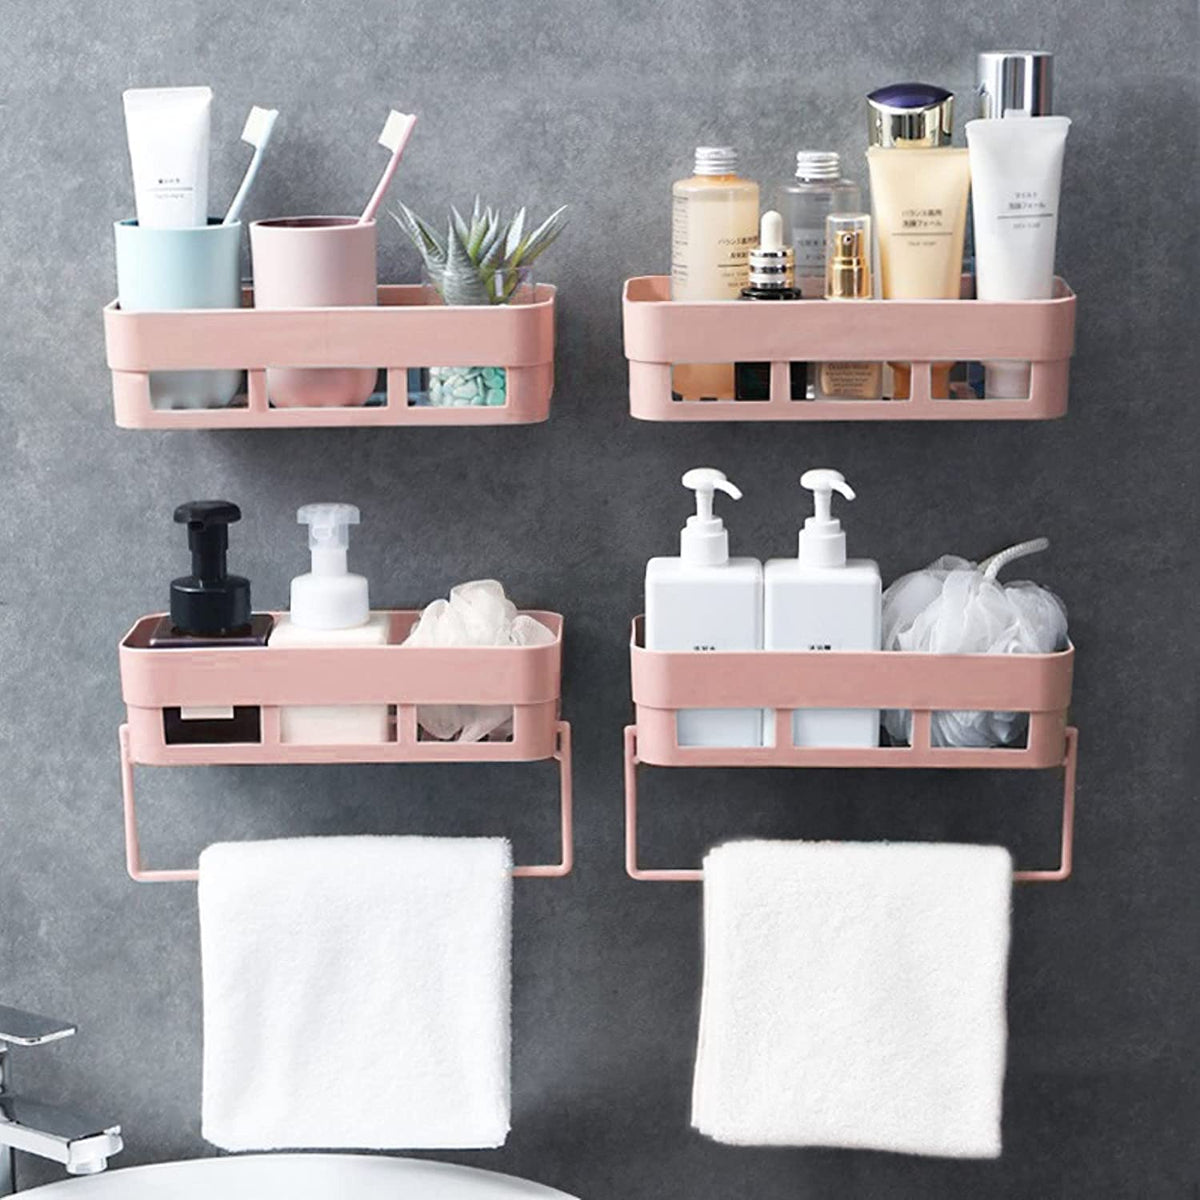 Primax Self Adhesive Bathroom Shelf/Bathroom Organizer Shelf/Wall Mount Bathroom Accessories(Pink-Pack of 4)